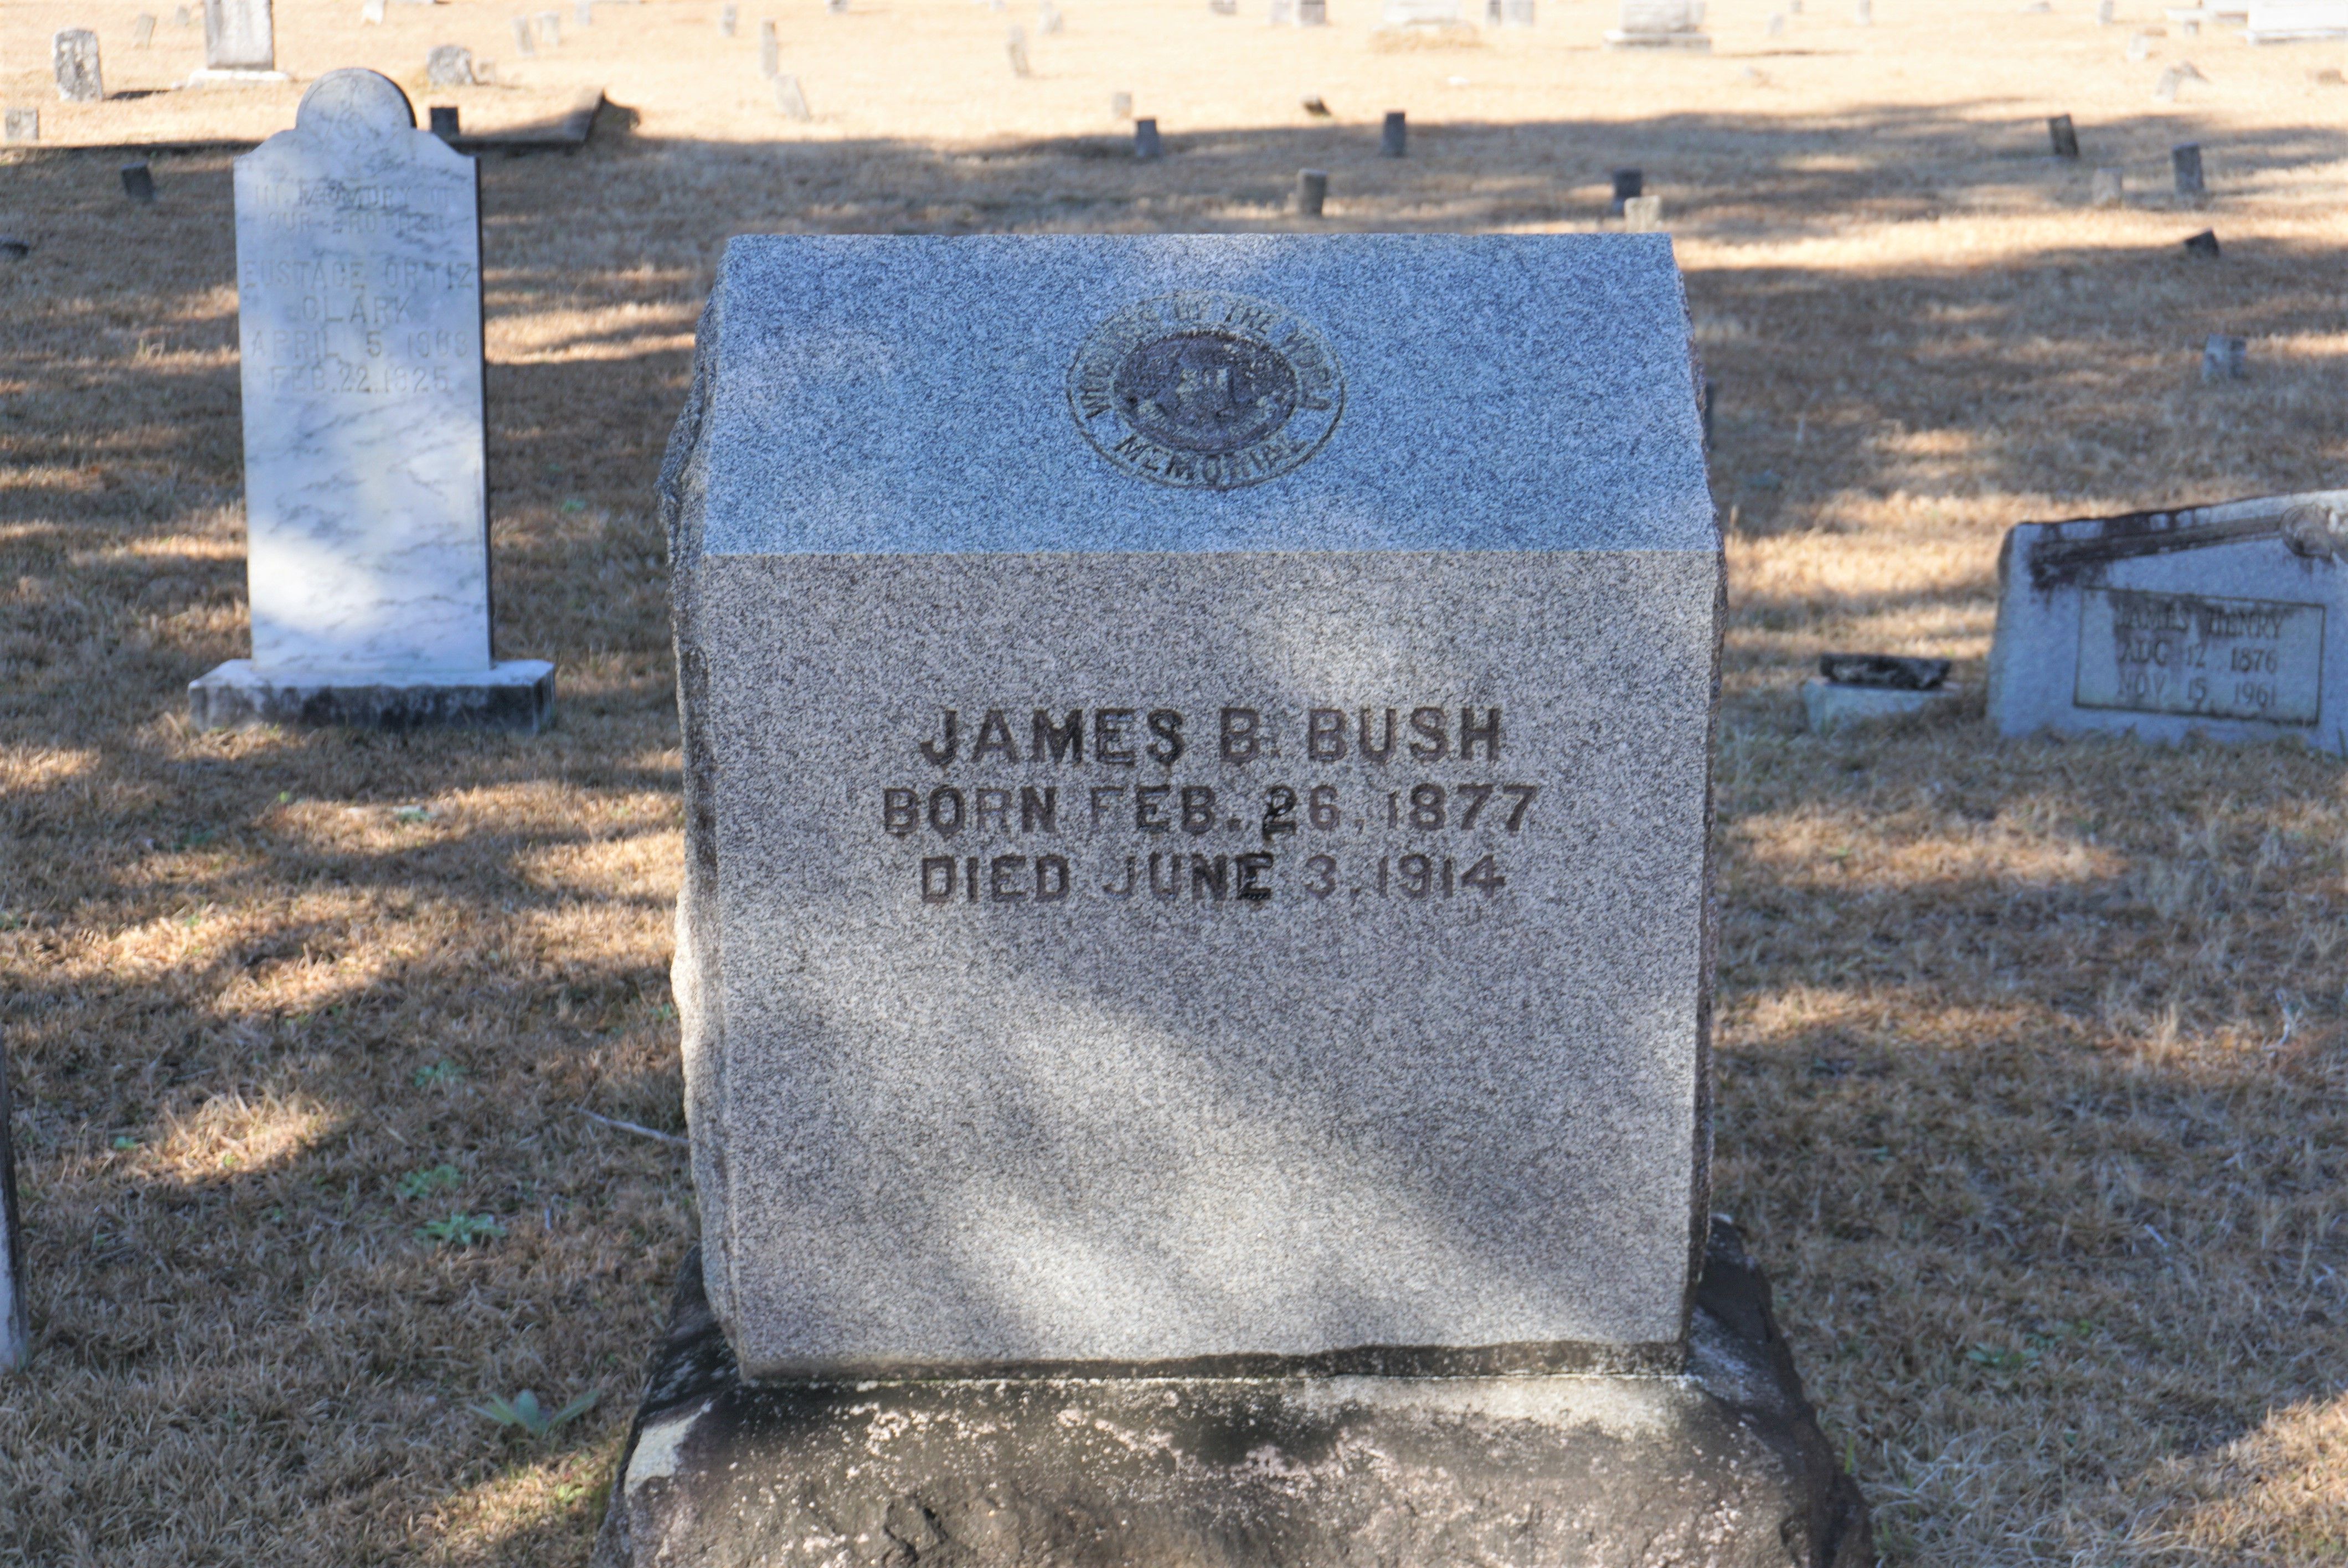 Deputy Sheriff James B. Bush | Gadsden County Sheriff's Office, Florida